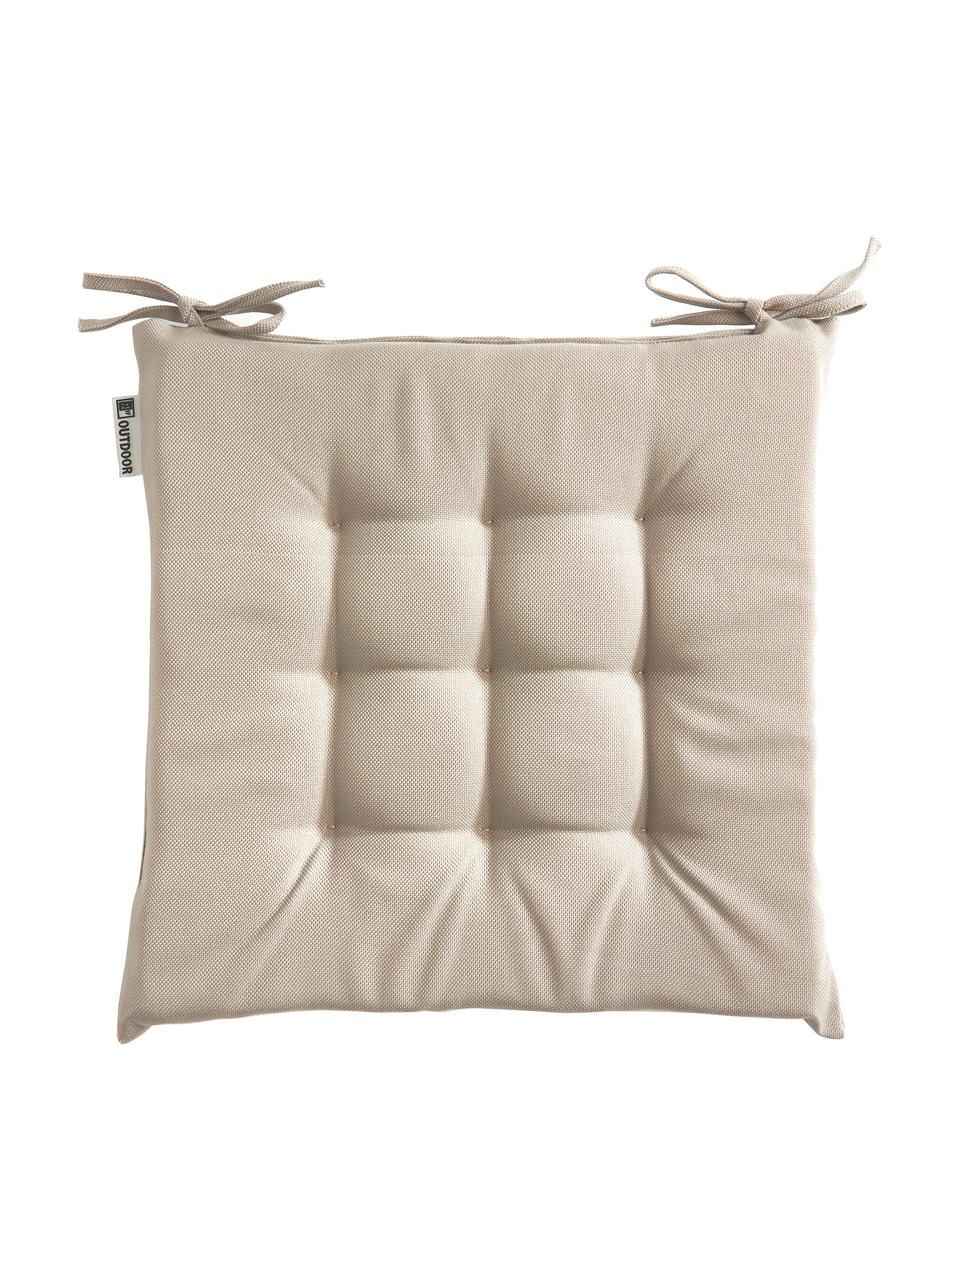 Cojín de asiento para exterior Olef, 100% algodón, Beige, An 40 x L 40 cm